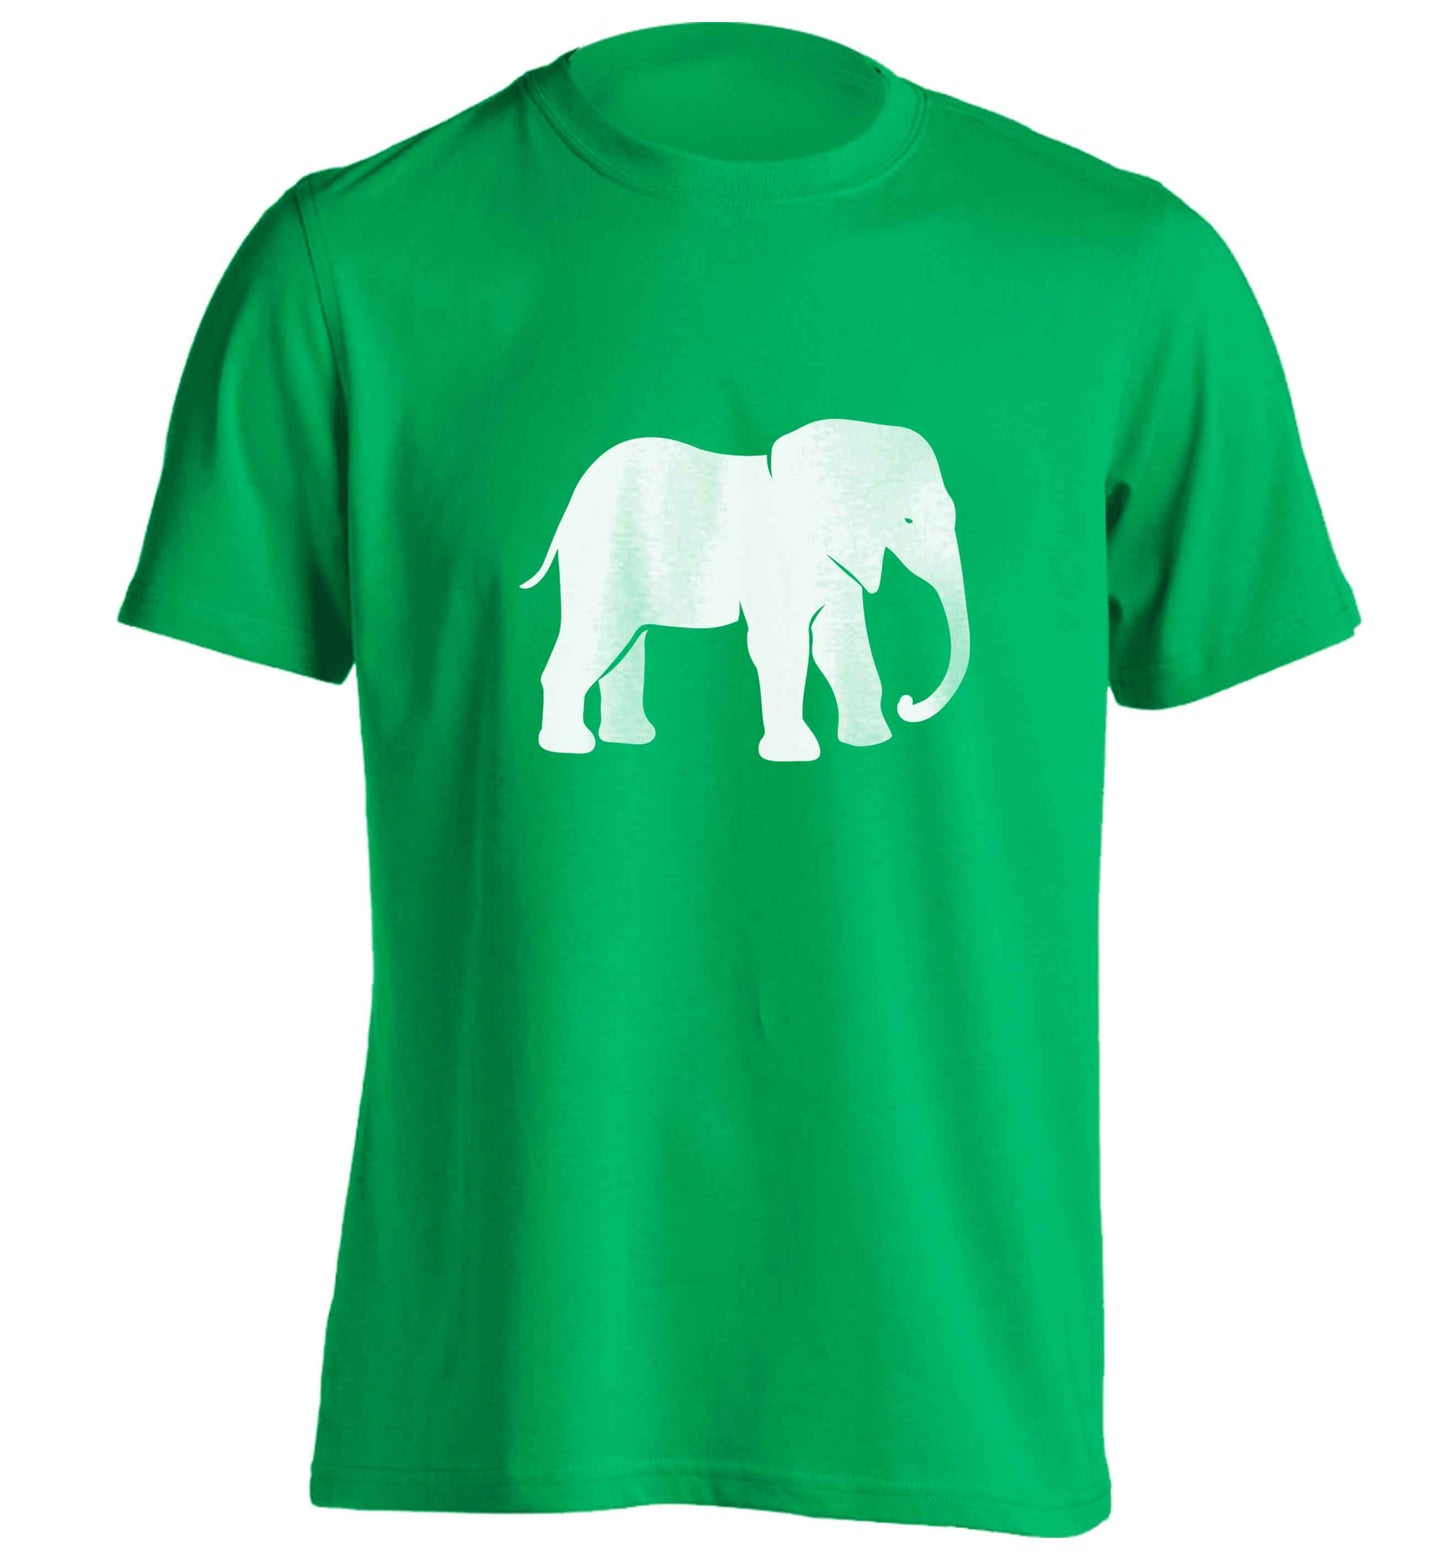 Pink elephant adults unisex green Tshirt 2XL